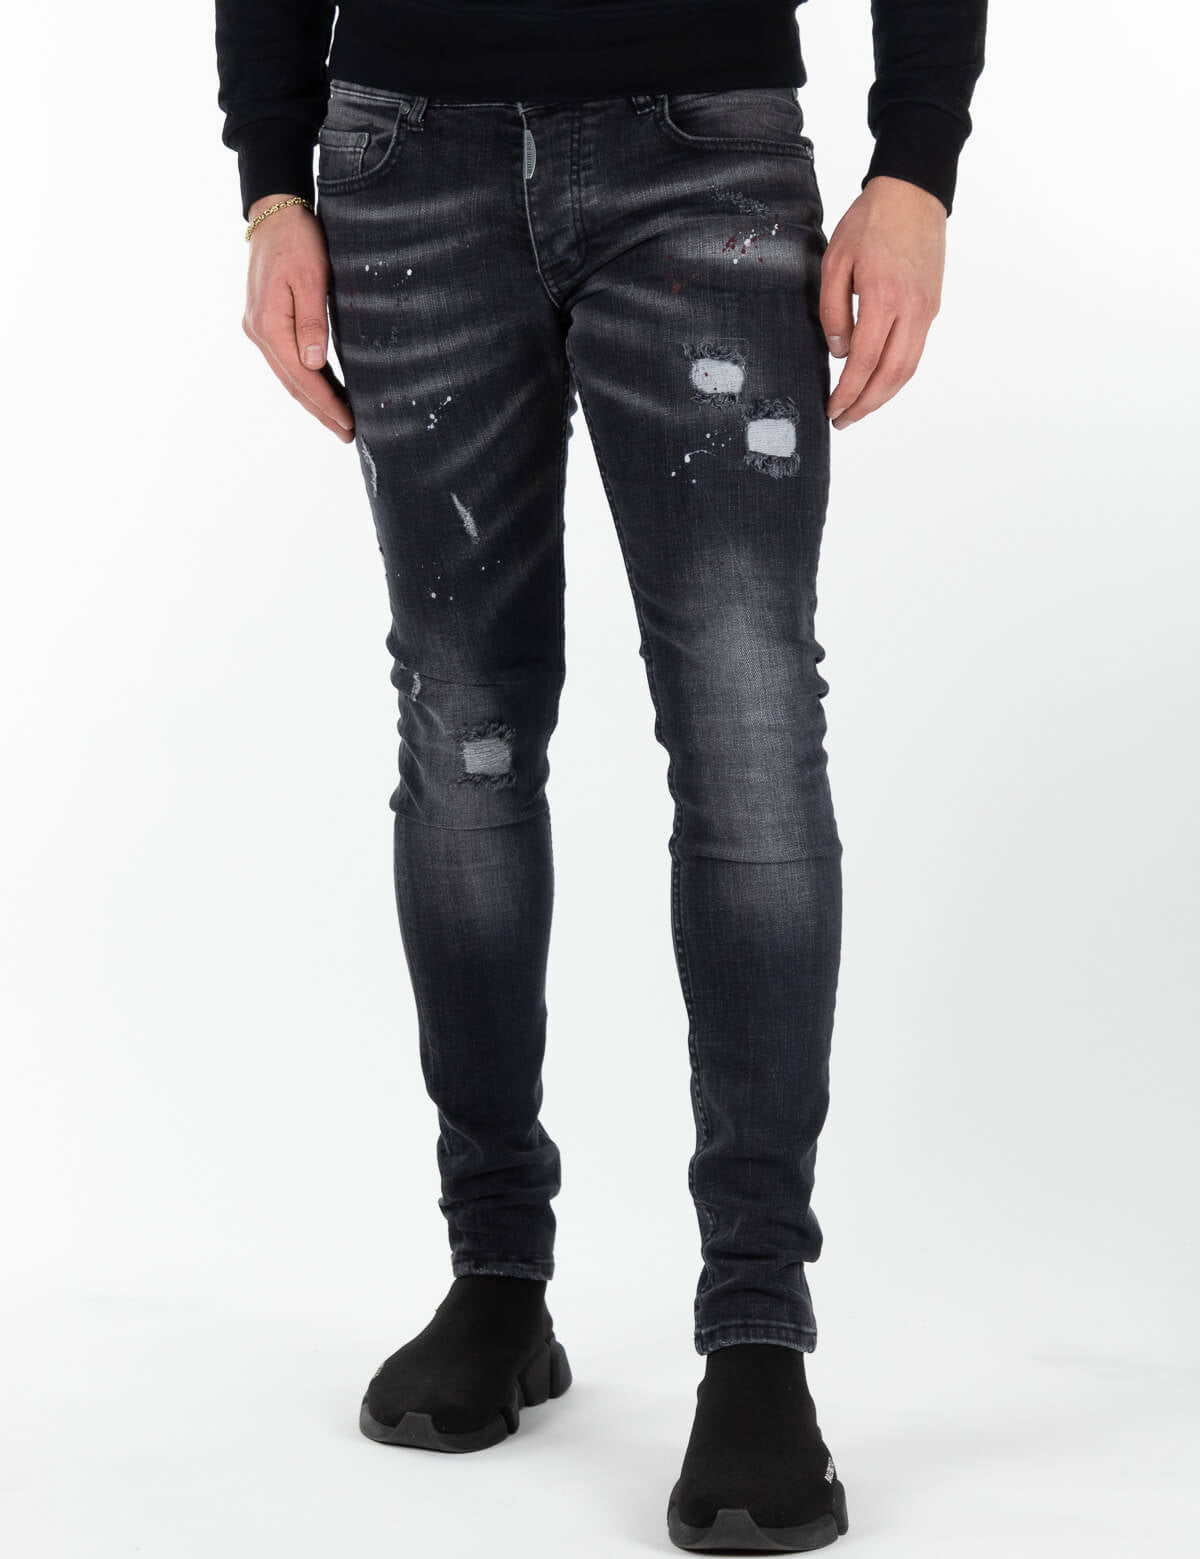 Sevilla Deluxe Dark Jeans